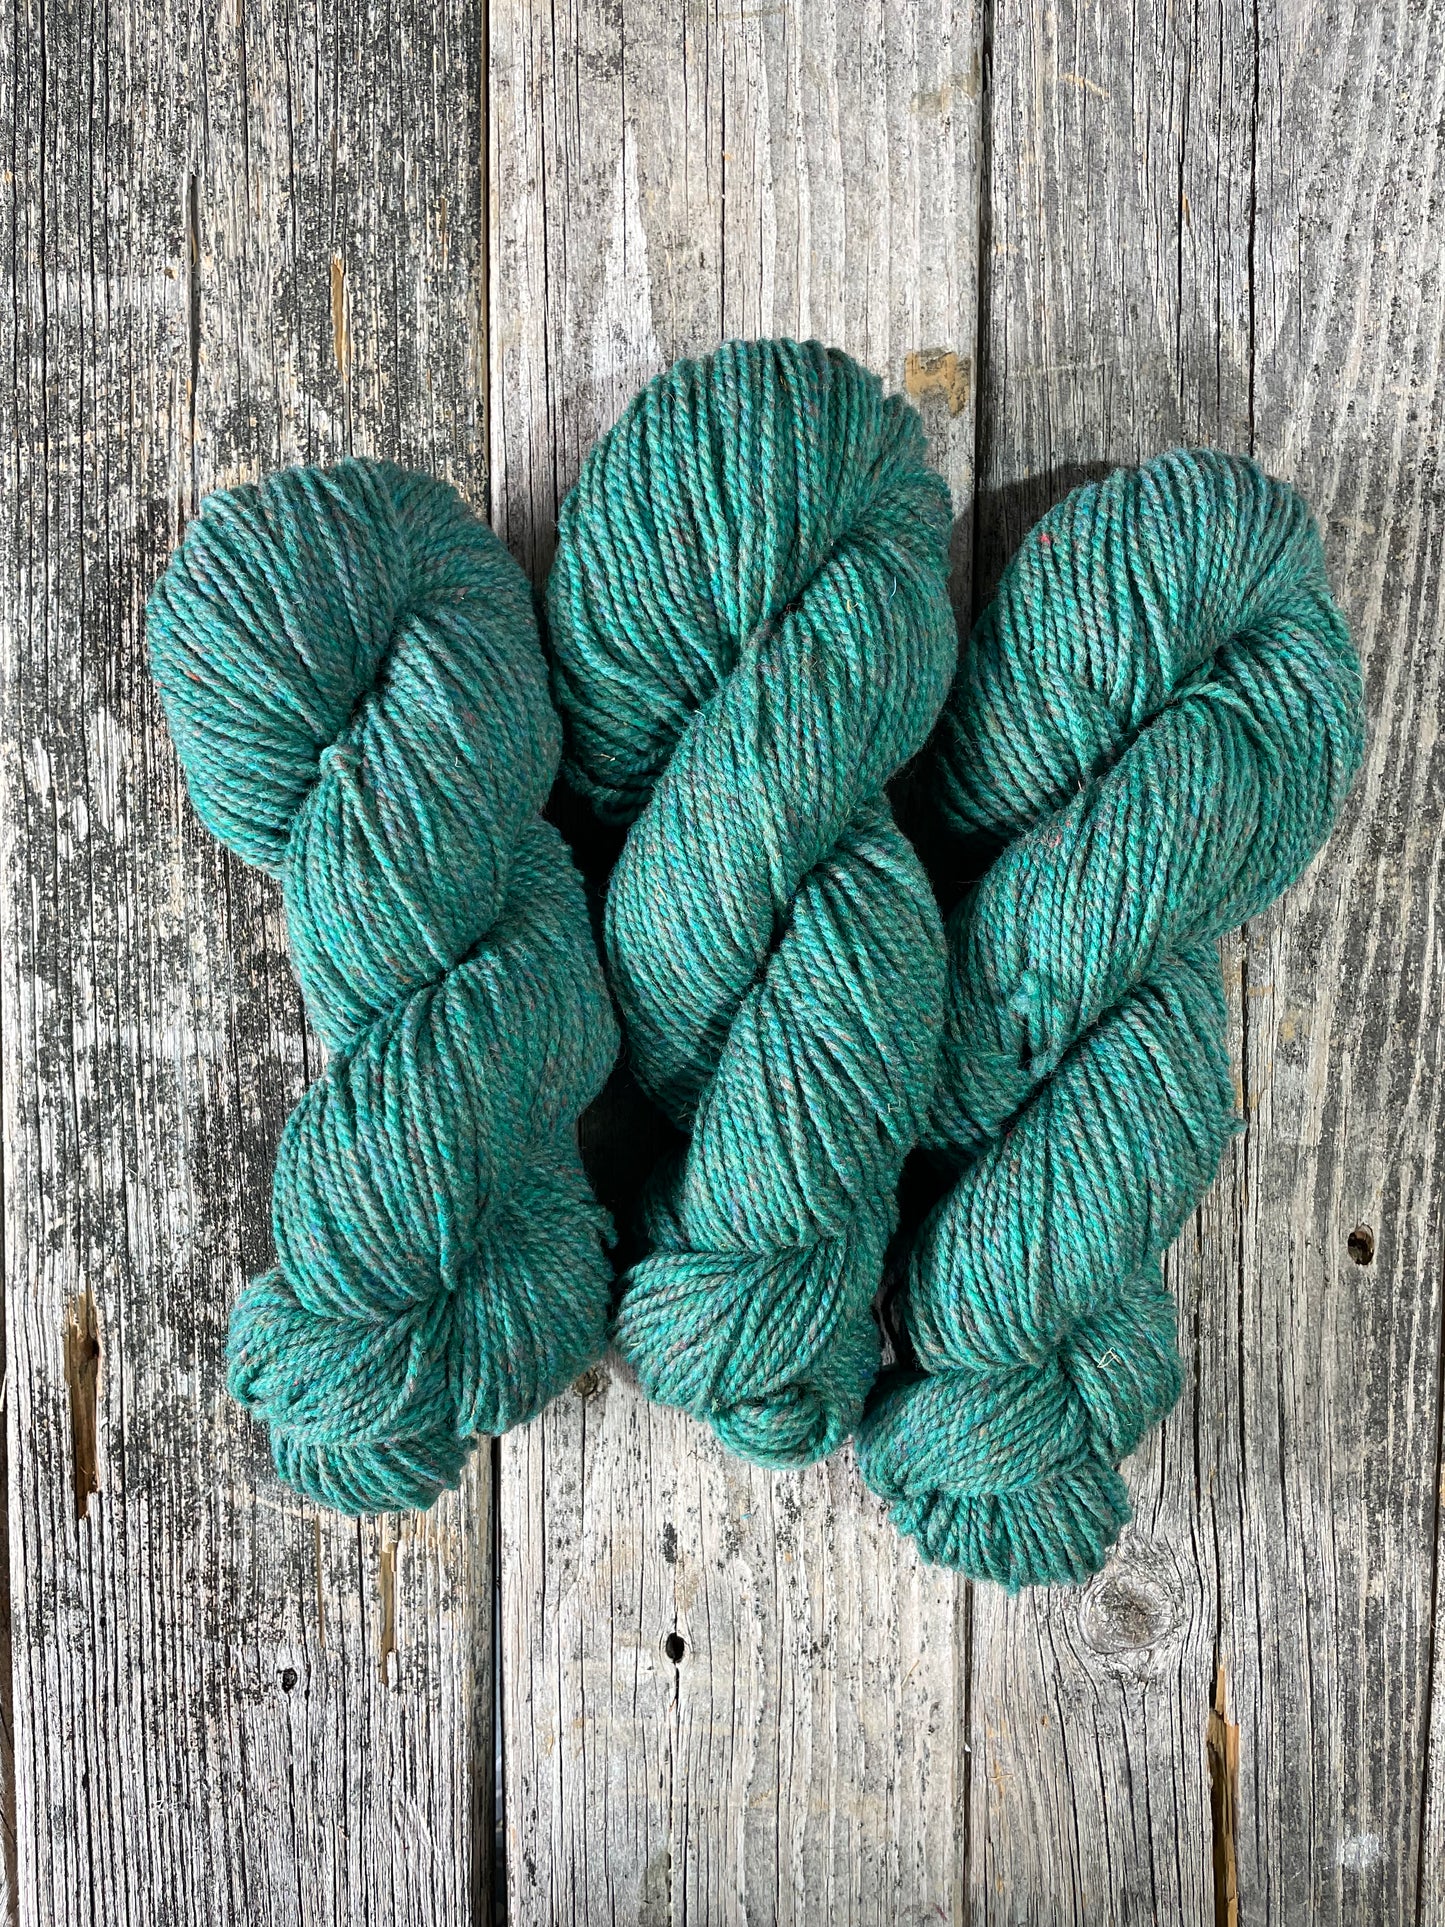 Briggs & Little Tuffy: Forest Green - Maine Yarn & Fiber Supply